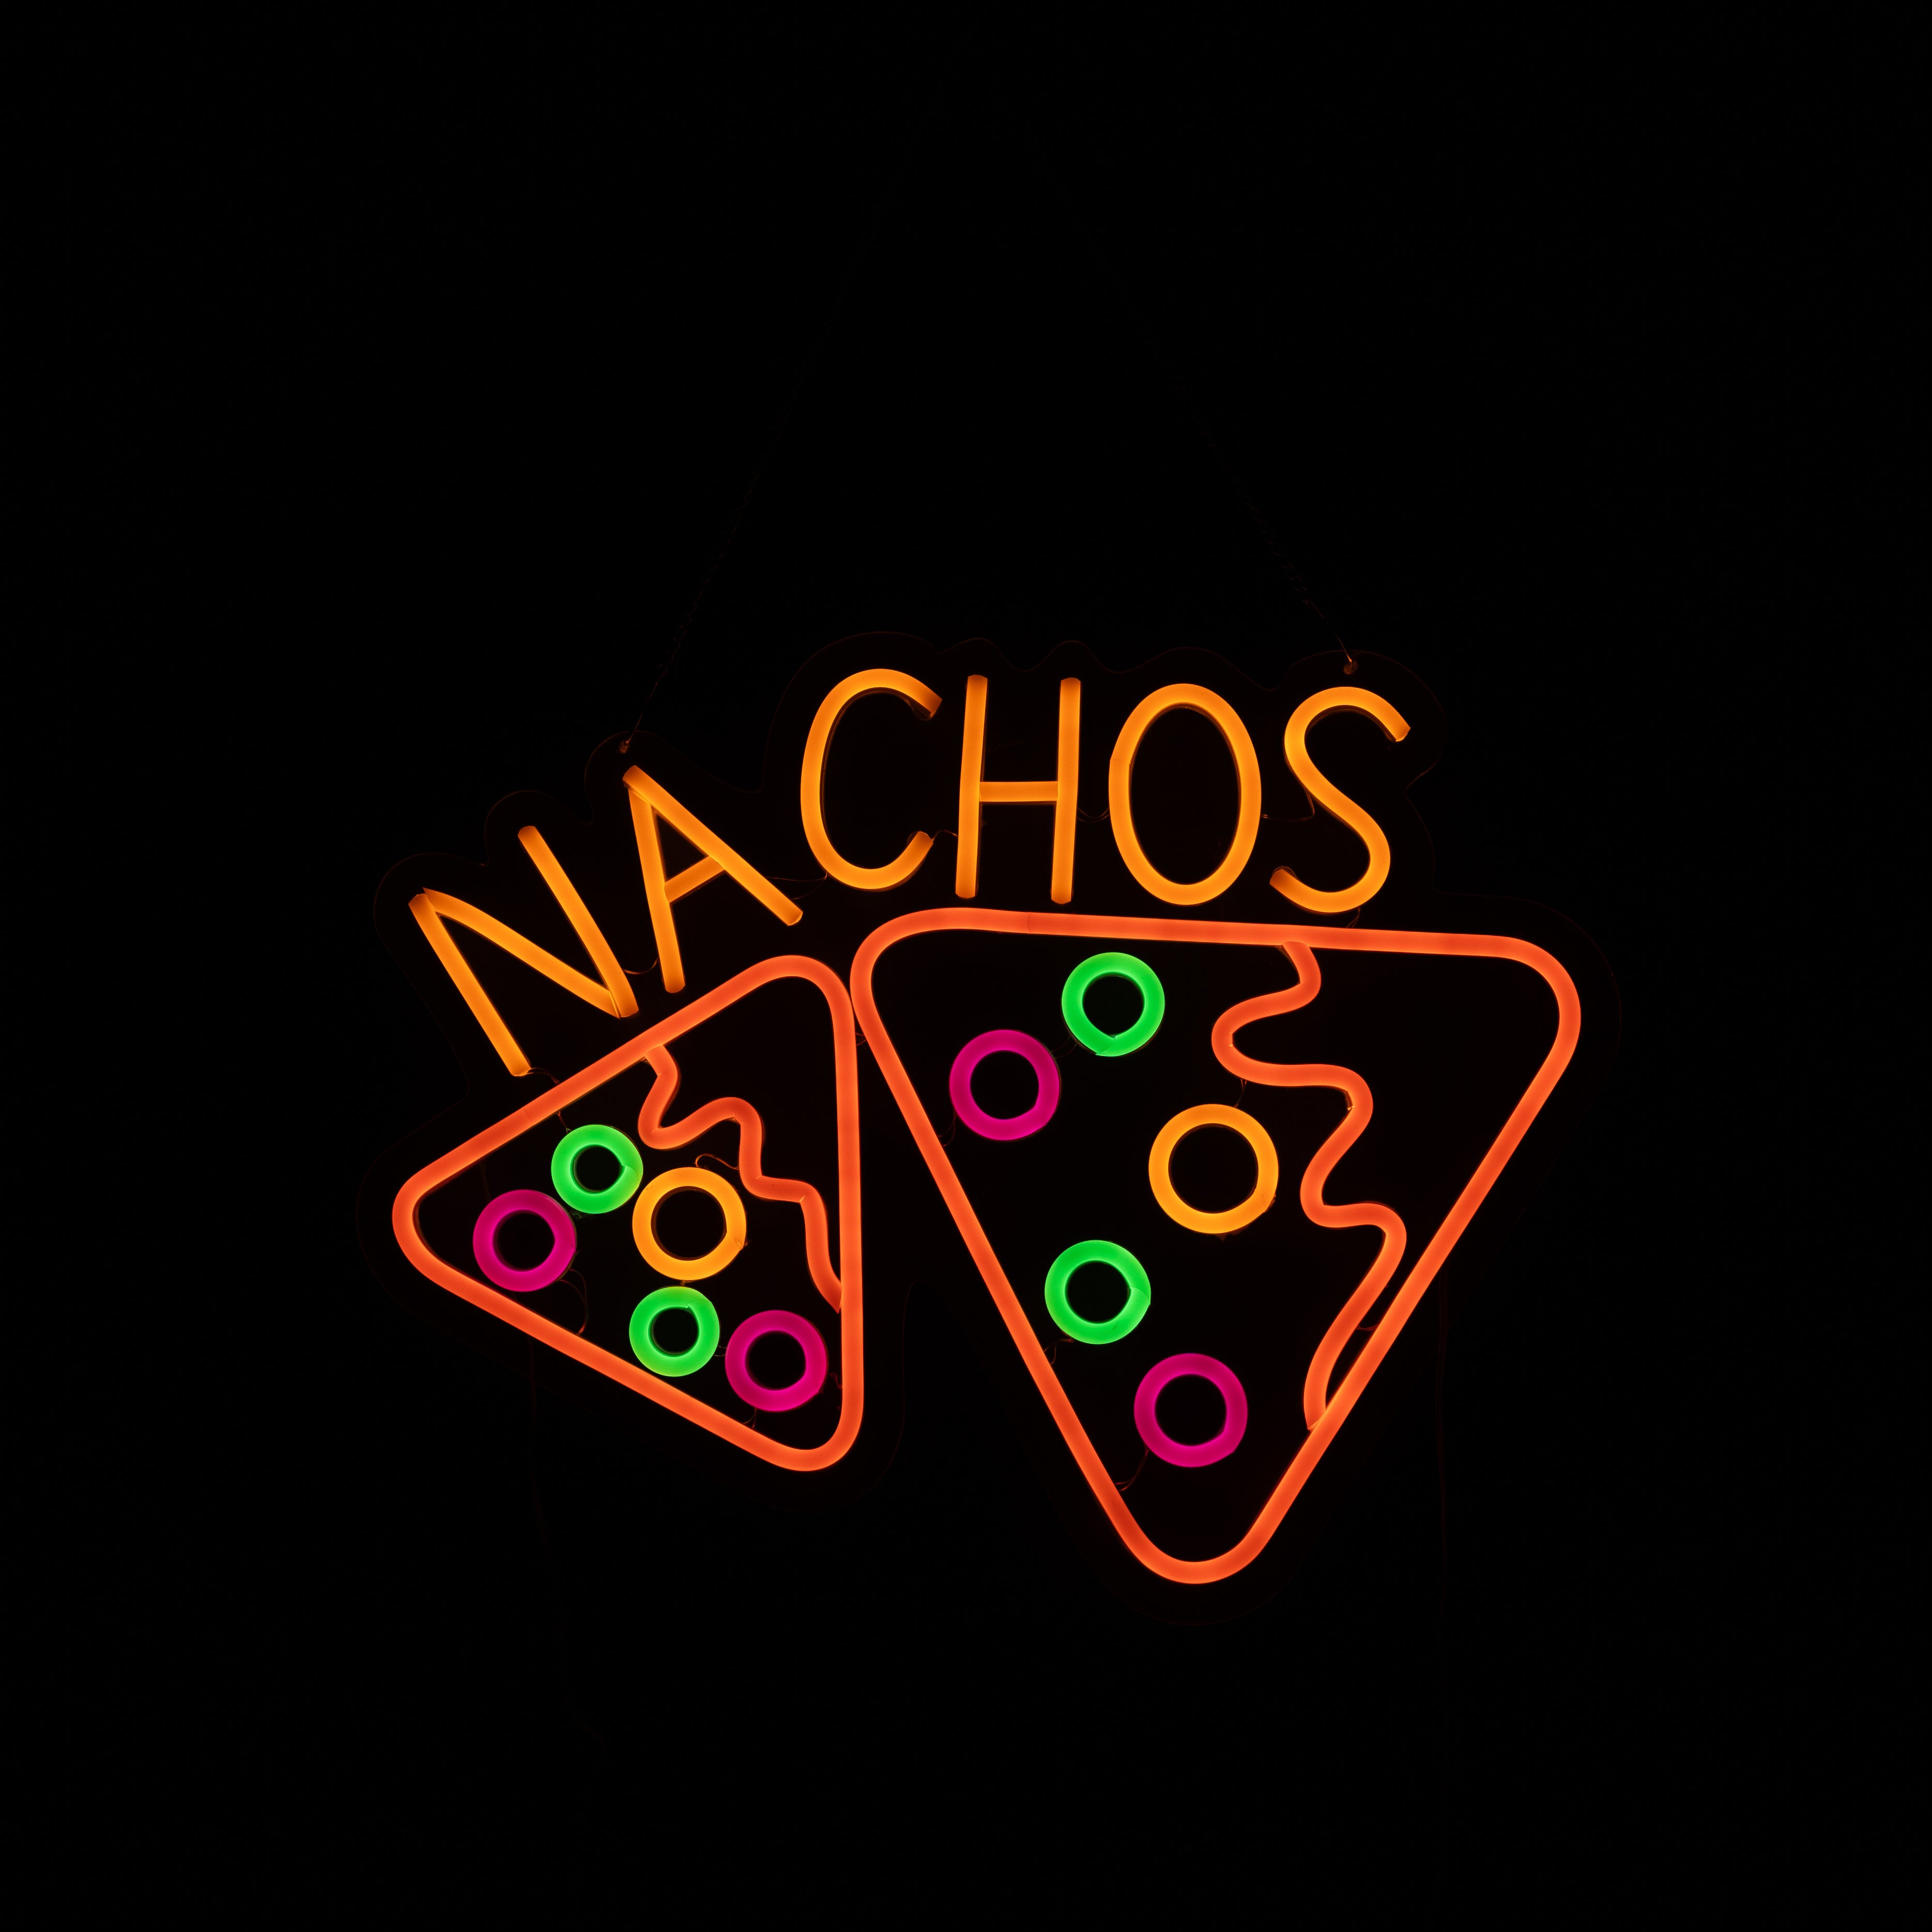 Nachos Neon style LED light up sign